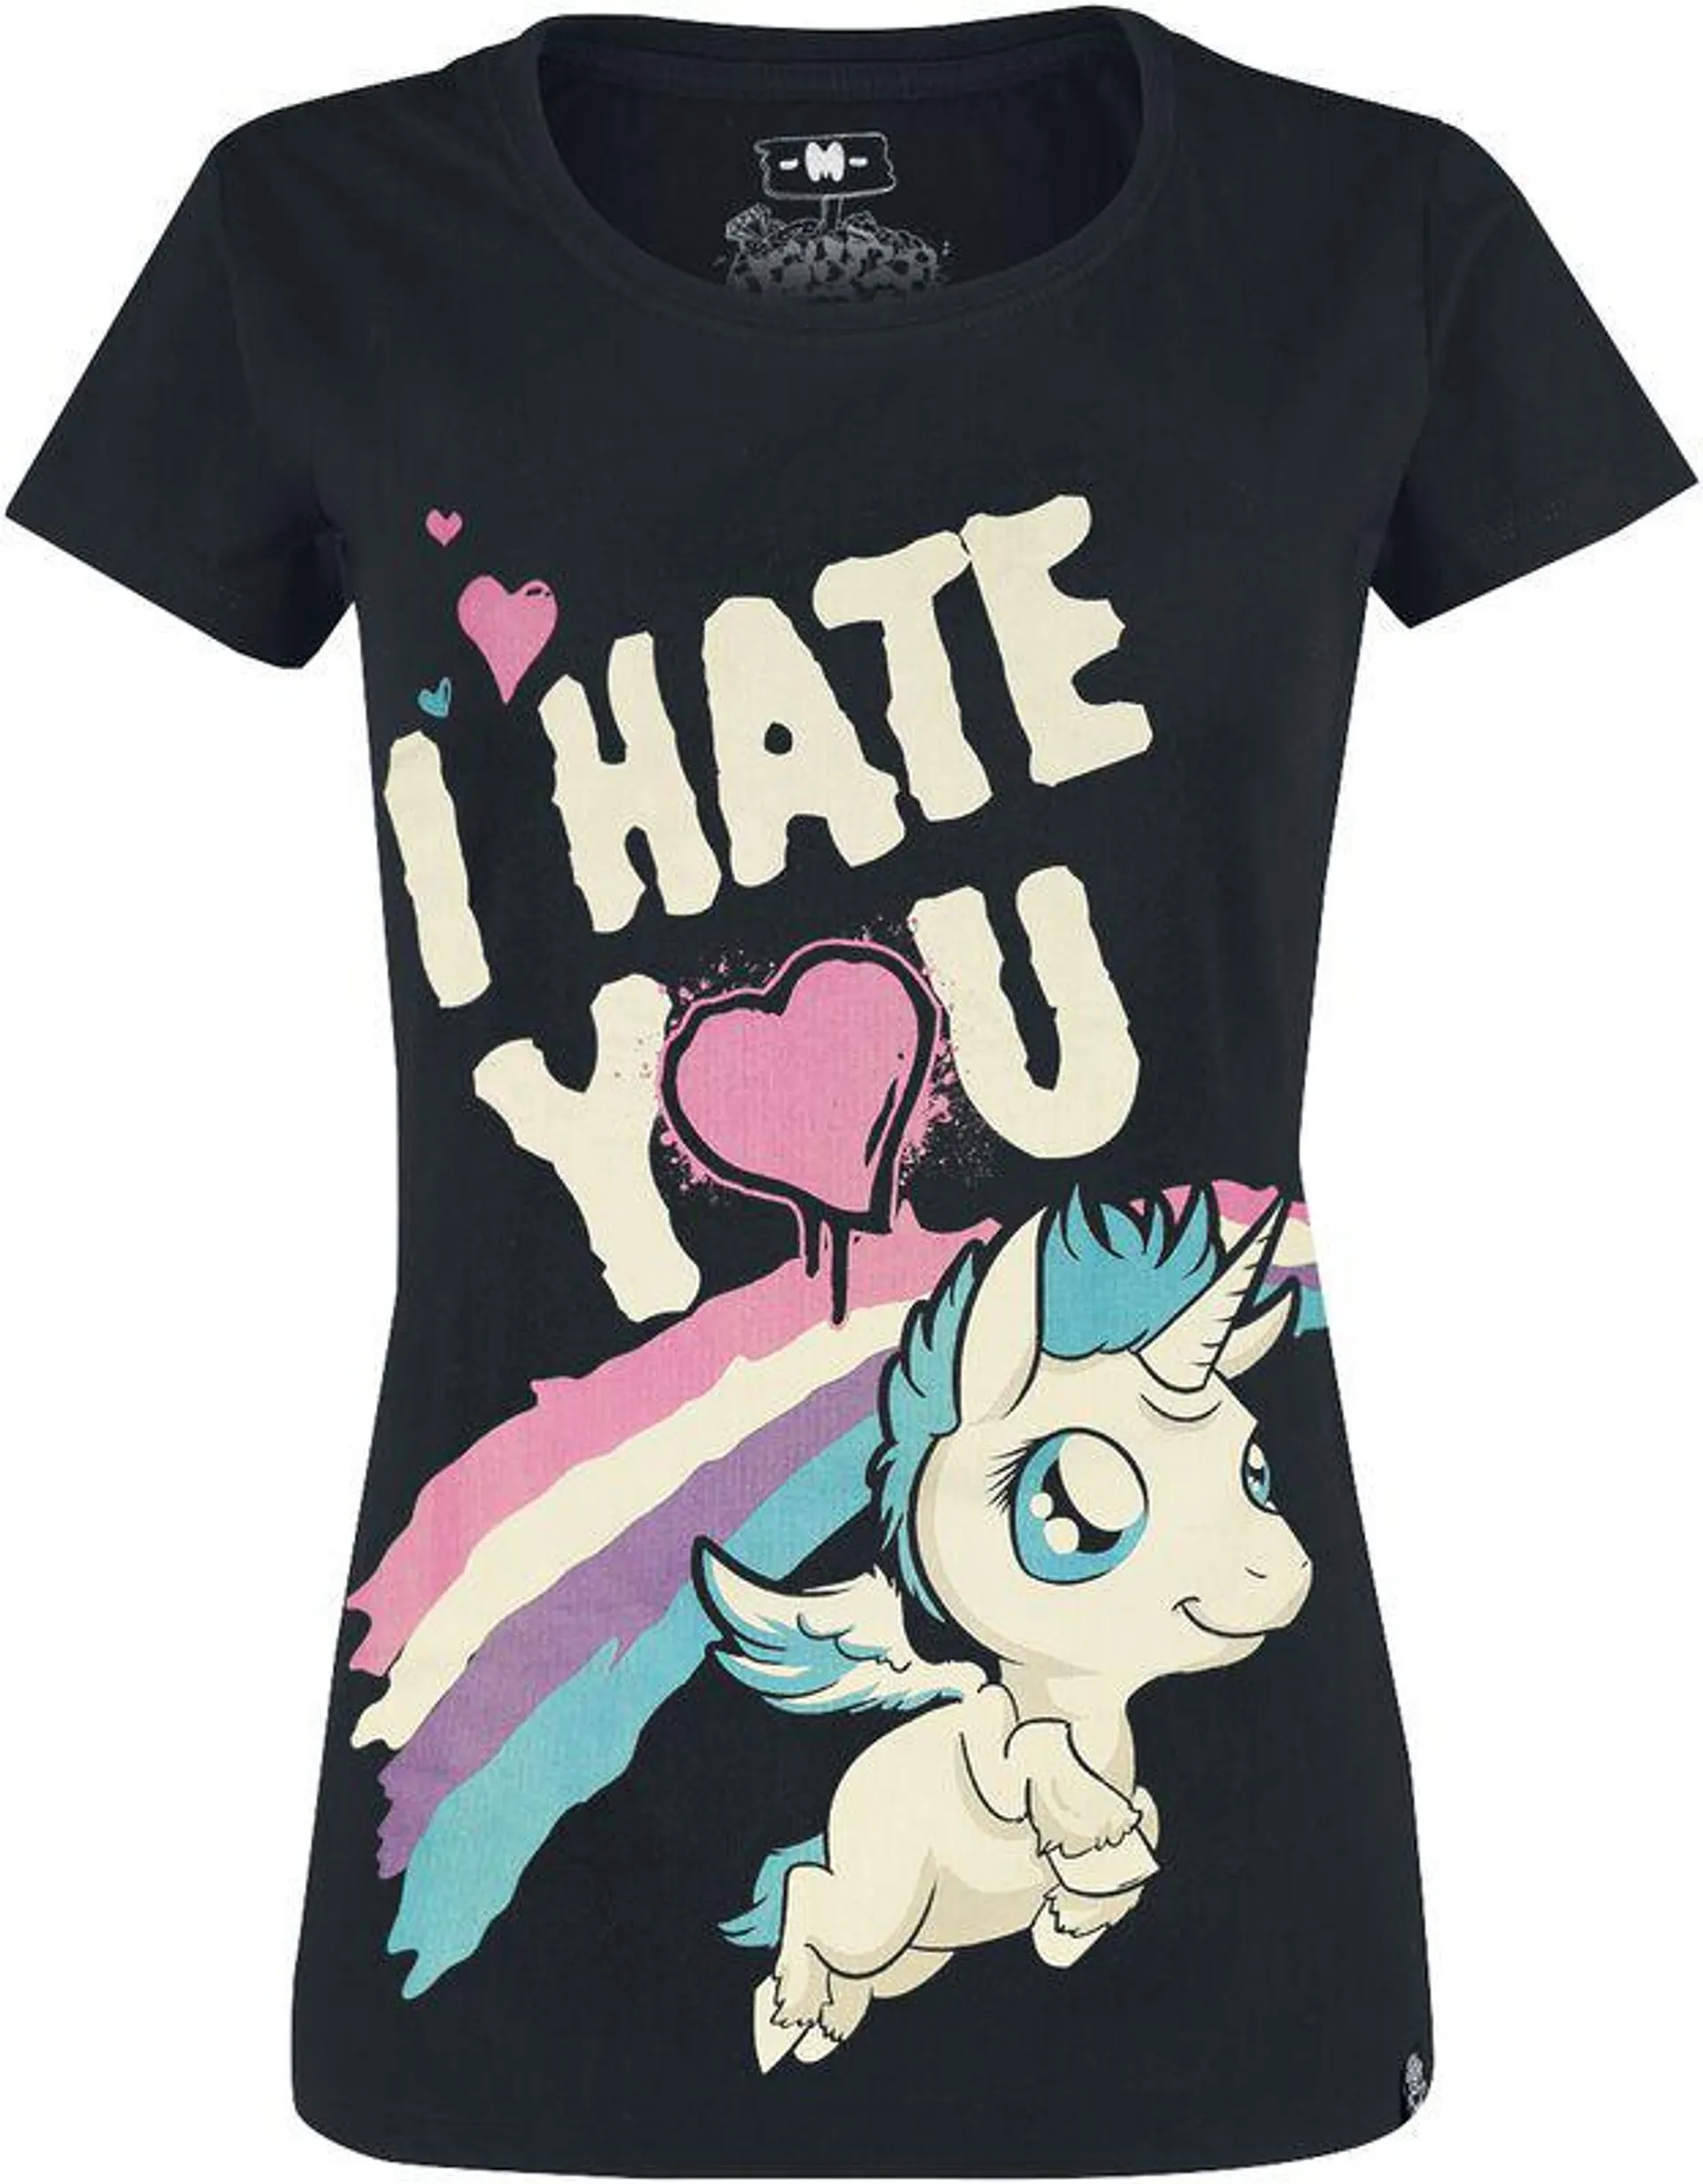 "I Hate You" Camiseta Negro de Unicornio